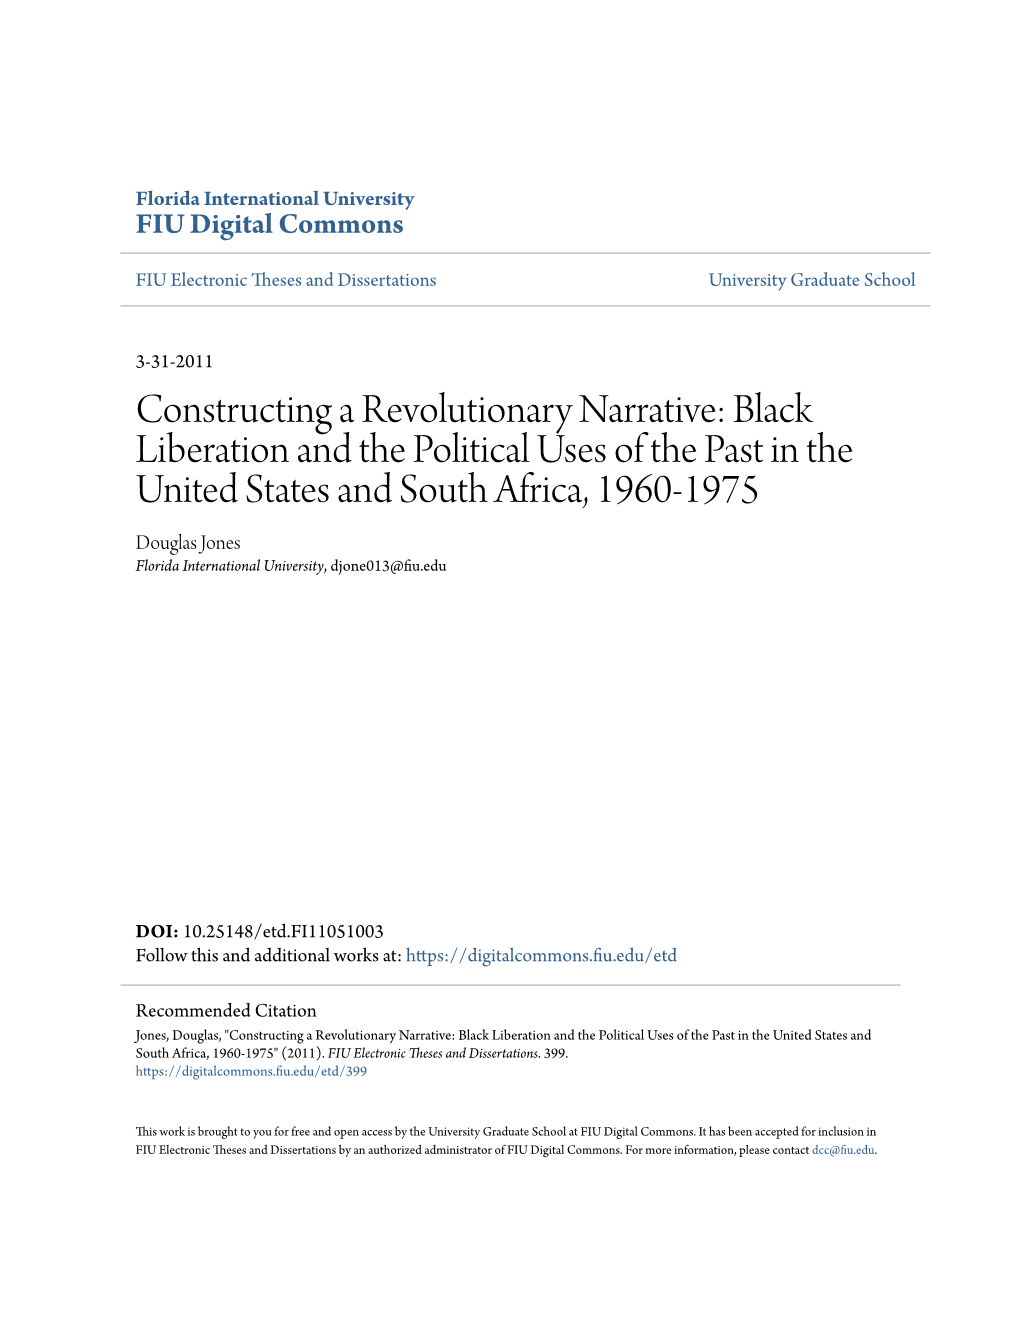 Constructing a Revolutionary Narrative: Black Liberation and The